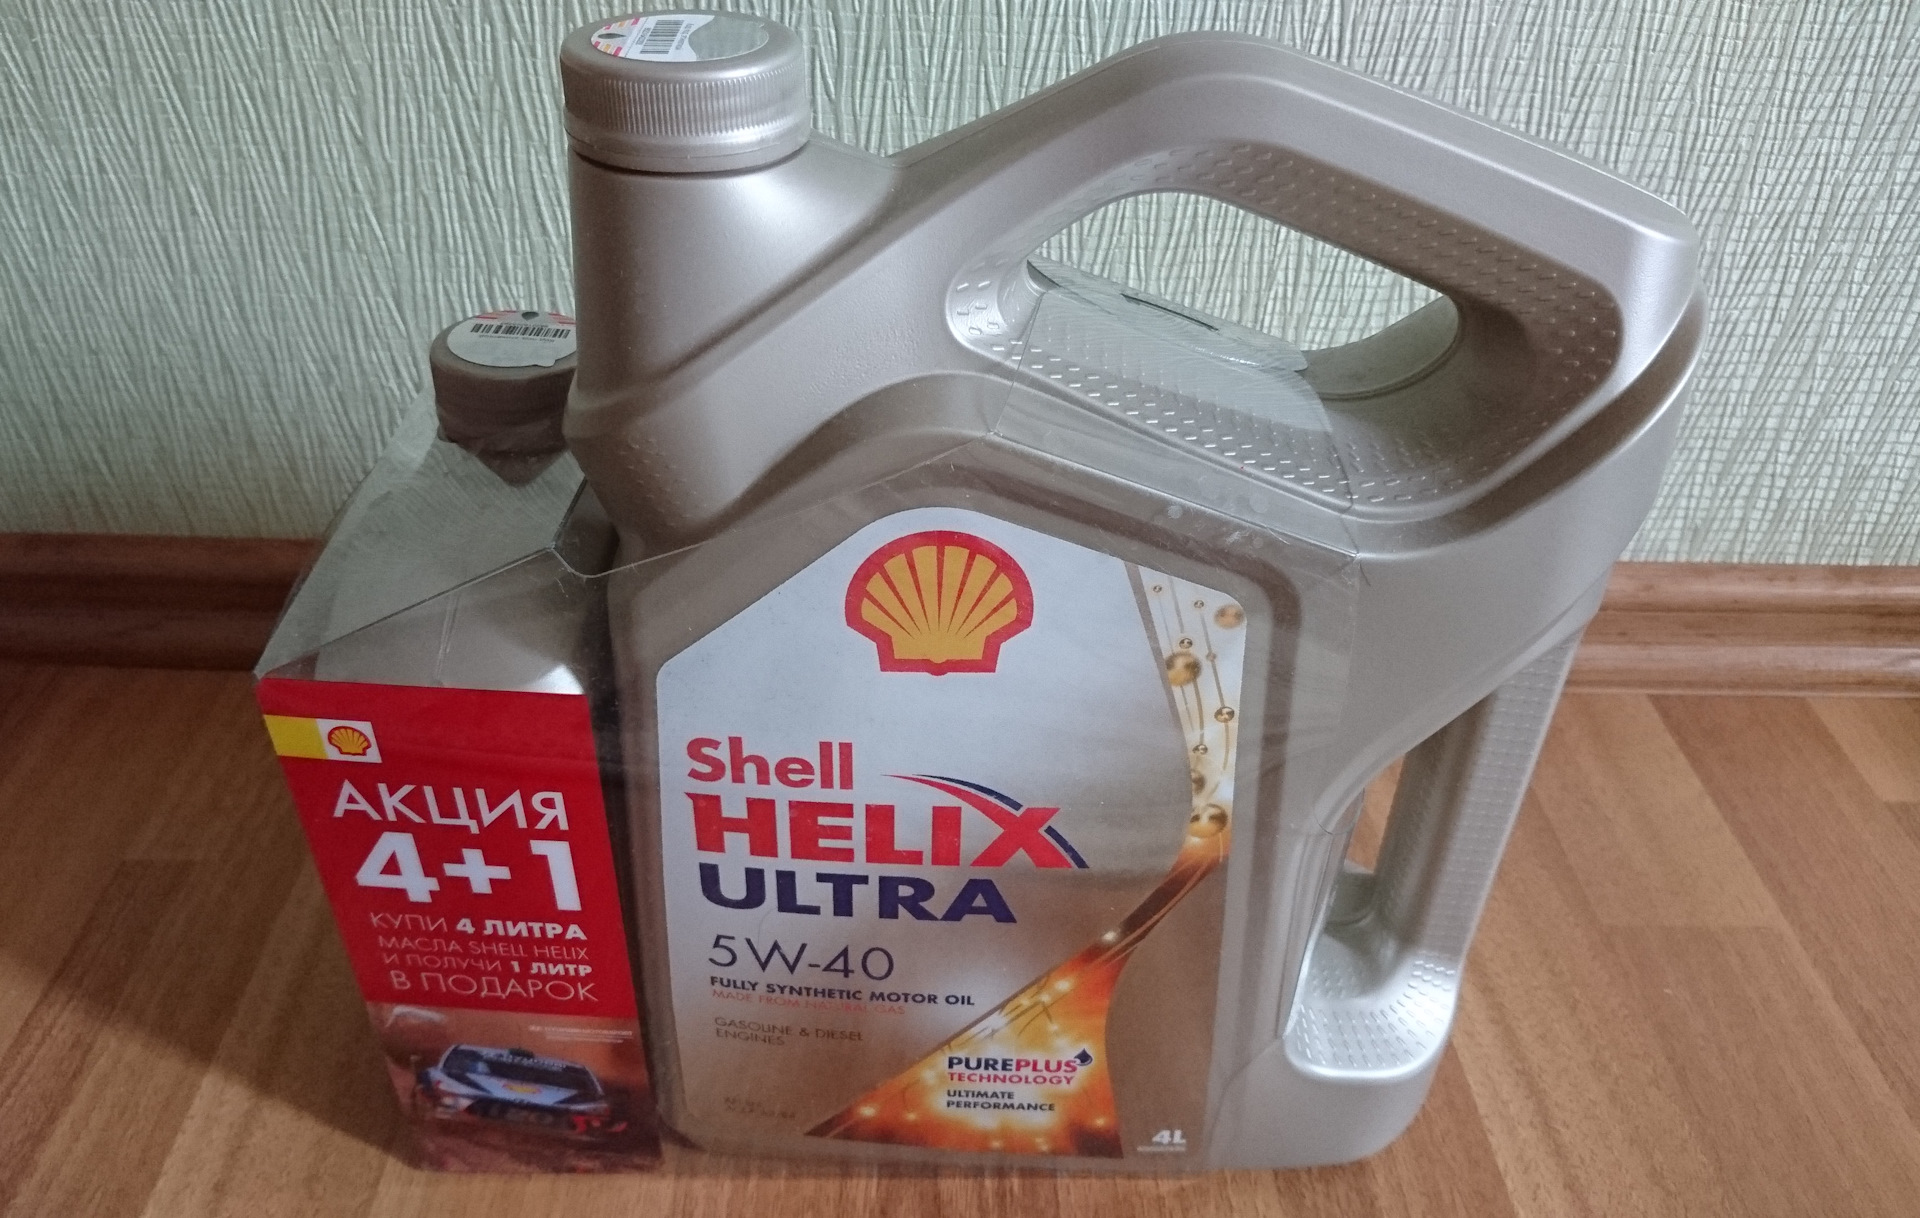 Shell Helix Ultra 5w40 серая канистра. Каким маслом заменить моторное масло Shell Ultra 5 40.